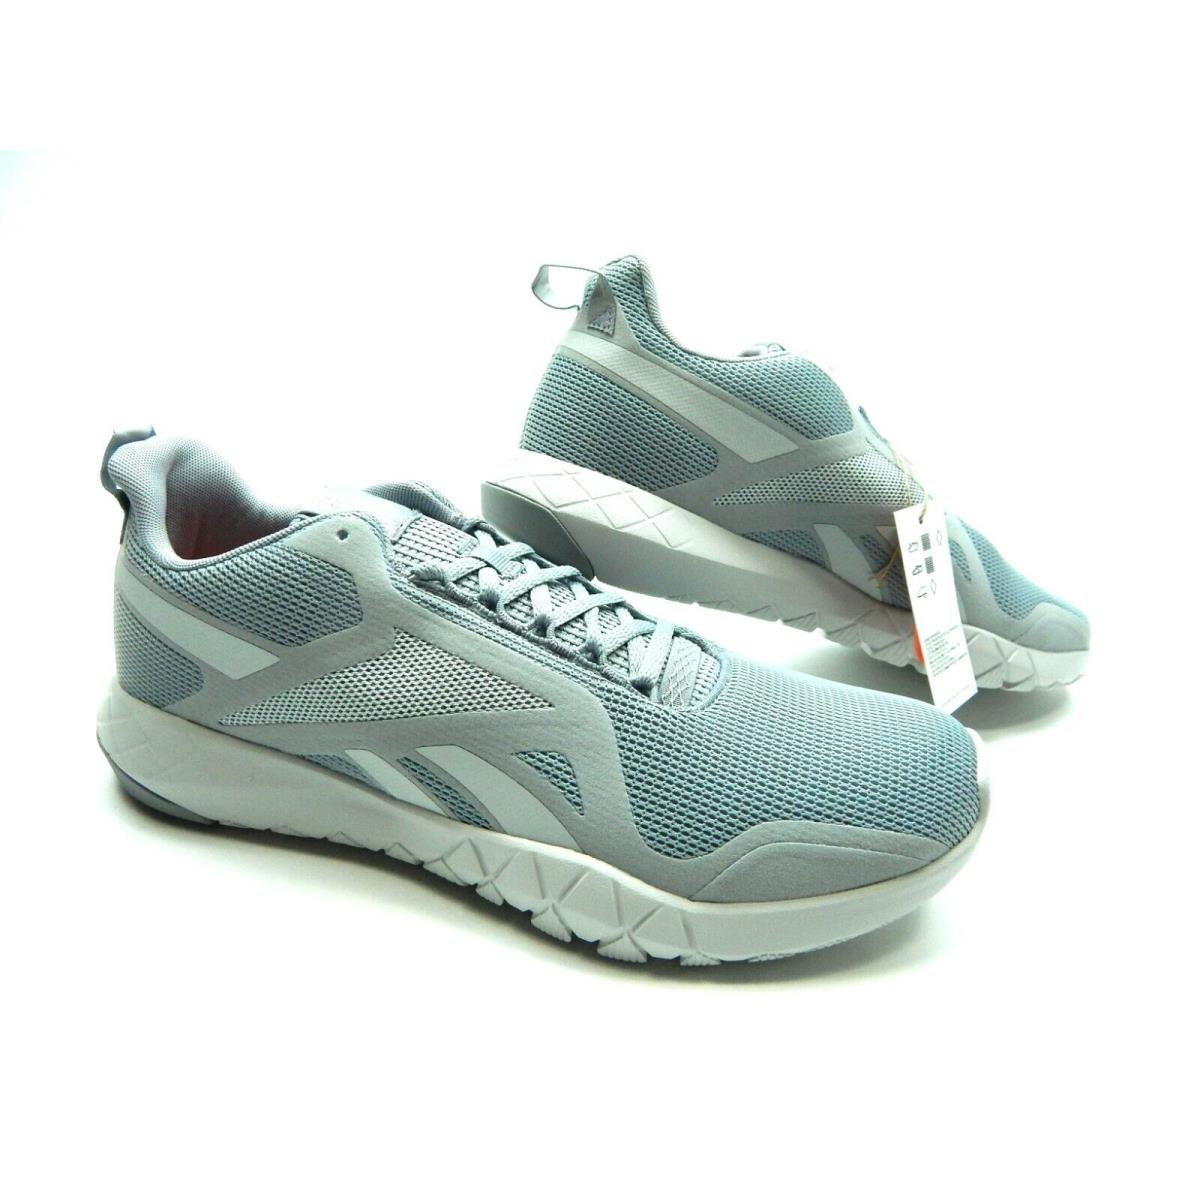 Reebok Flexagon Force 3.0 FY1250 Pugry 4 Men Shoes Size 10.5